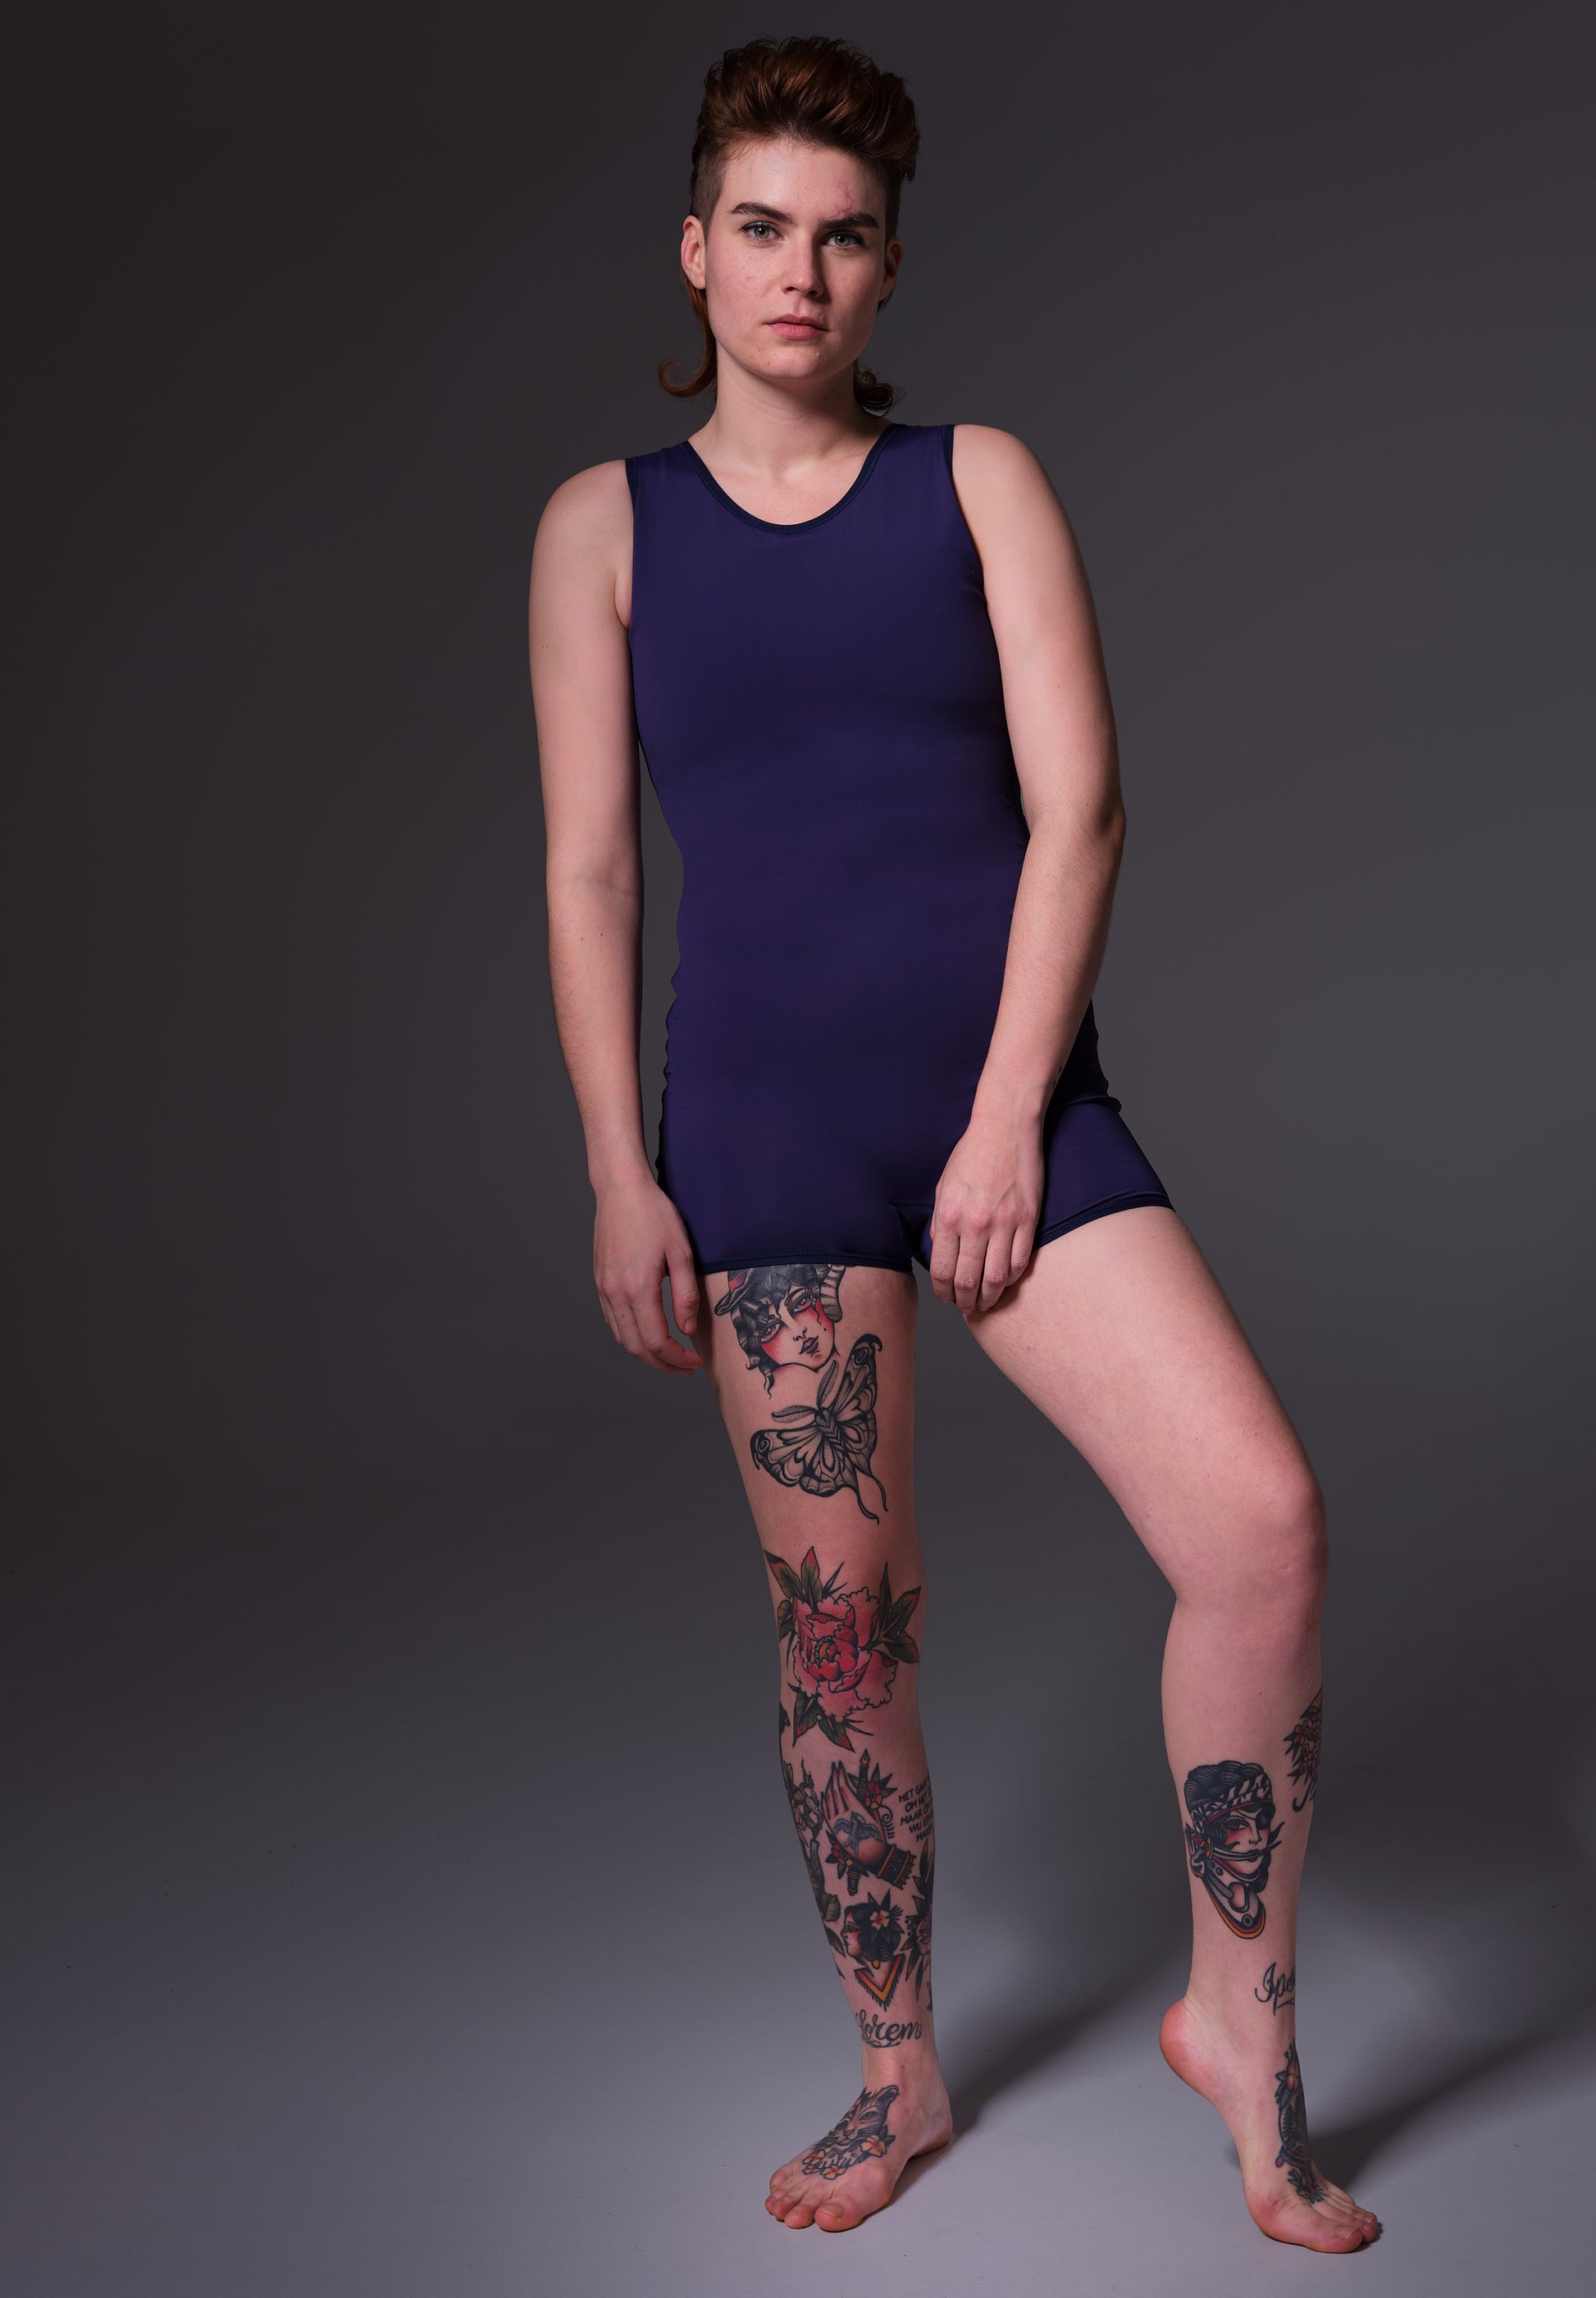 Lene is modeling the Swimsuit Binder dark blue, seen from the front